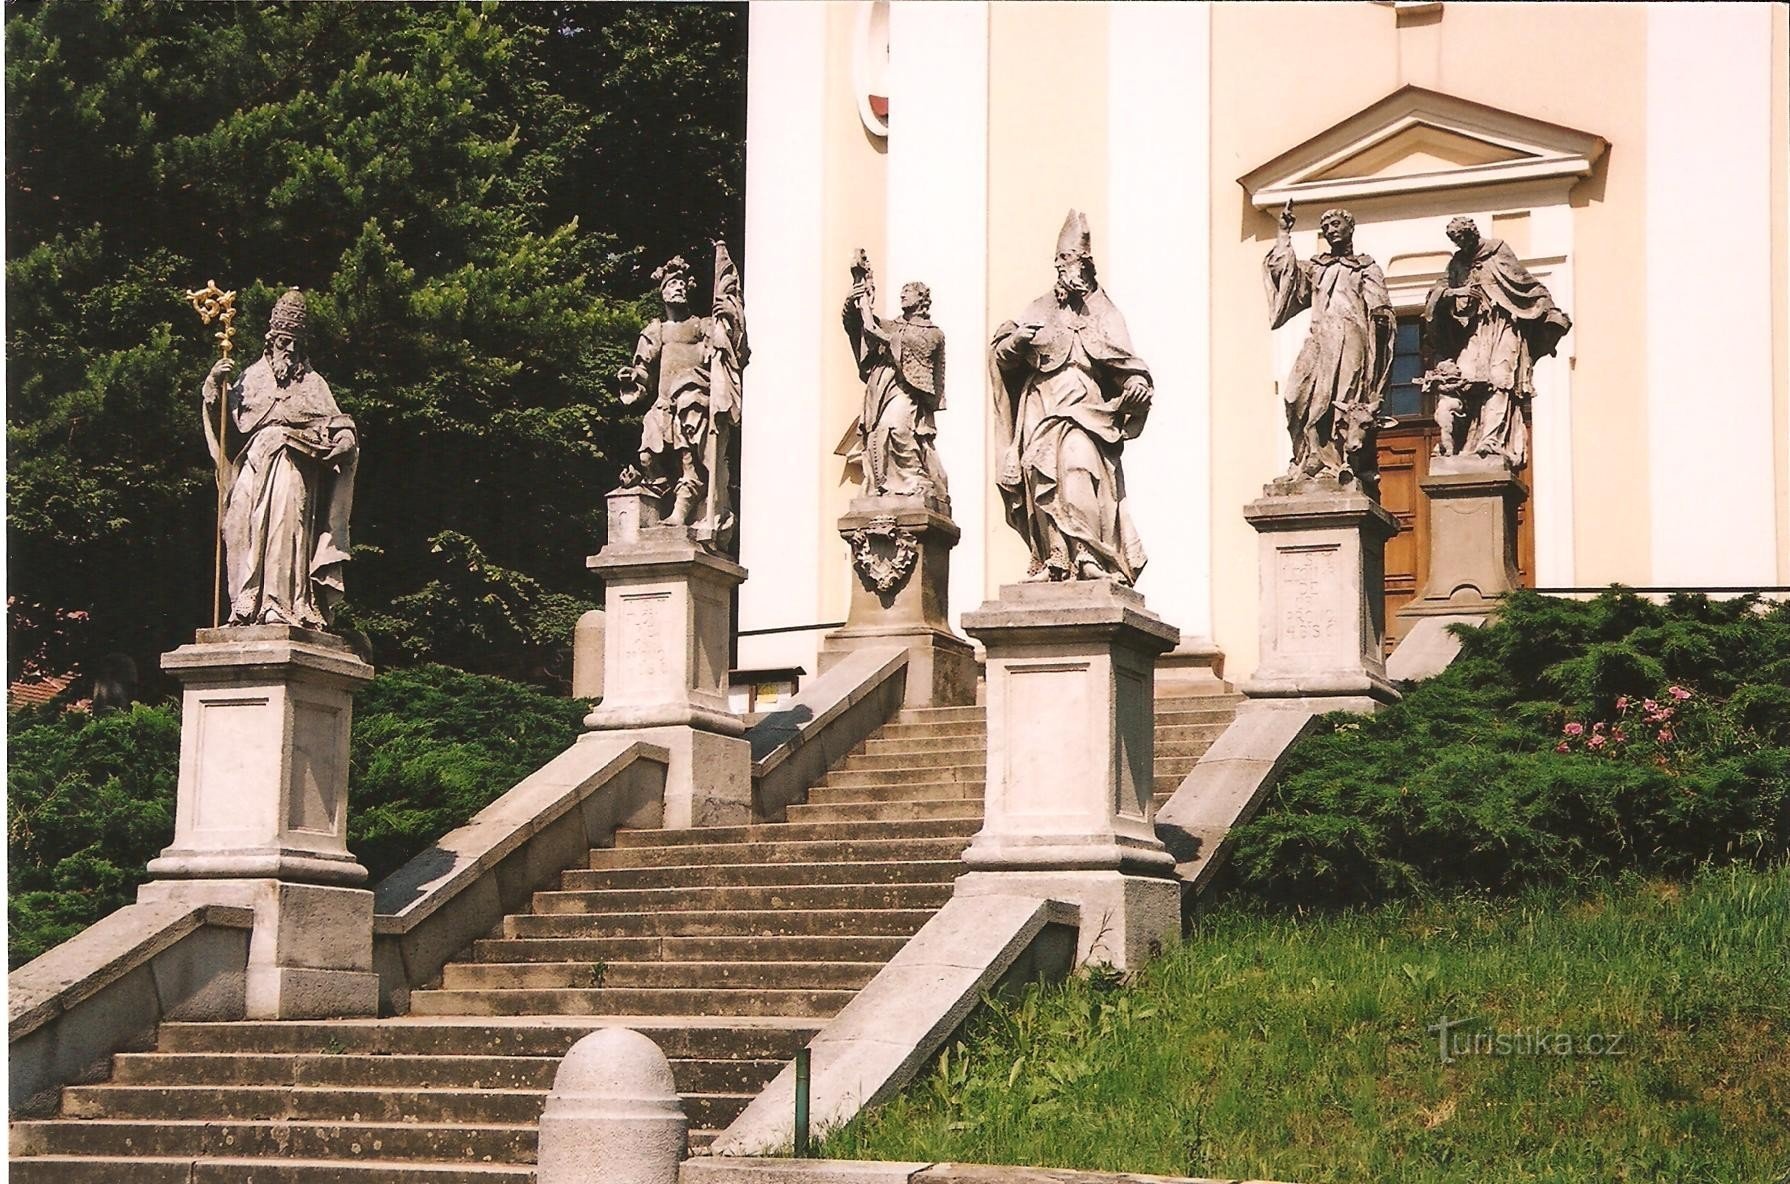 Eingangstreppe mit Skulpturengalerie